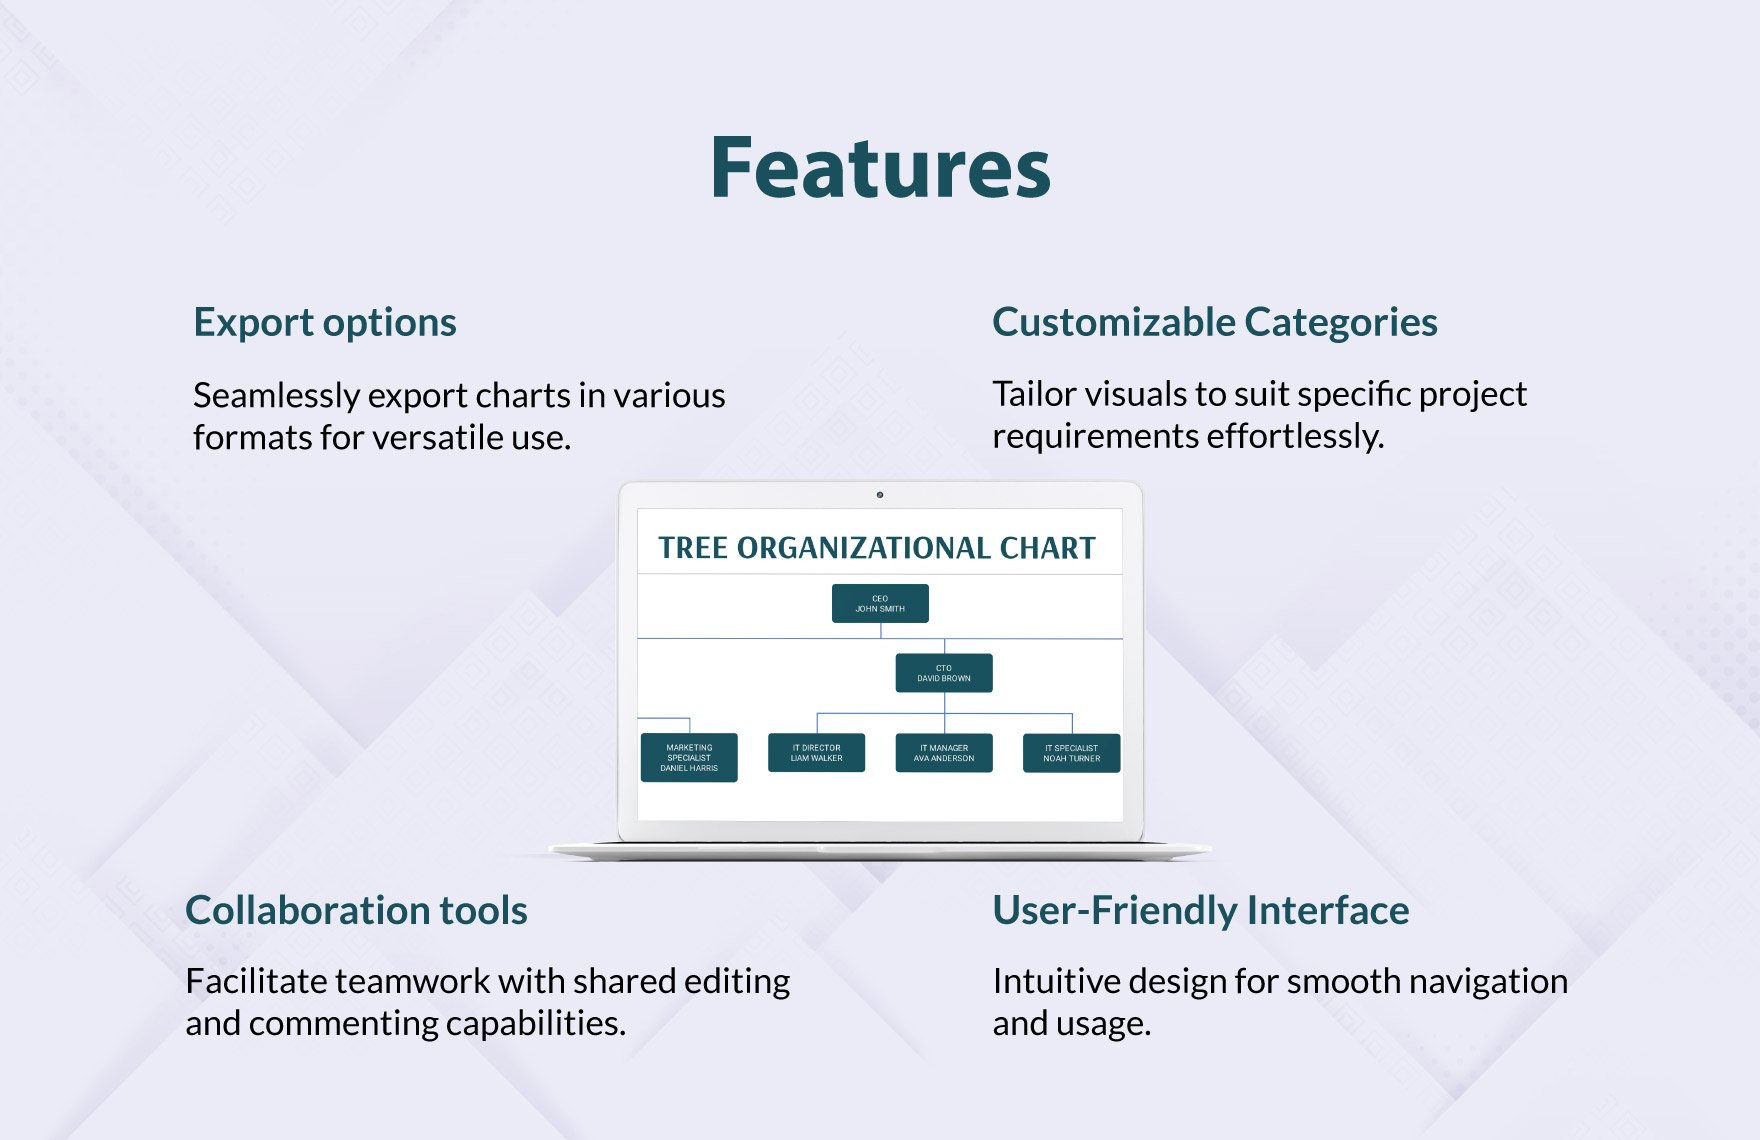 Tree Organizational Chart Template